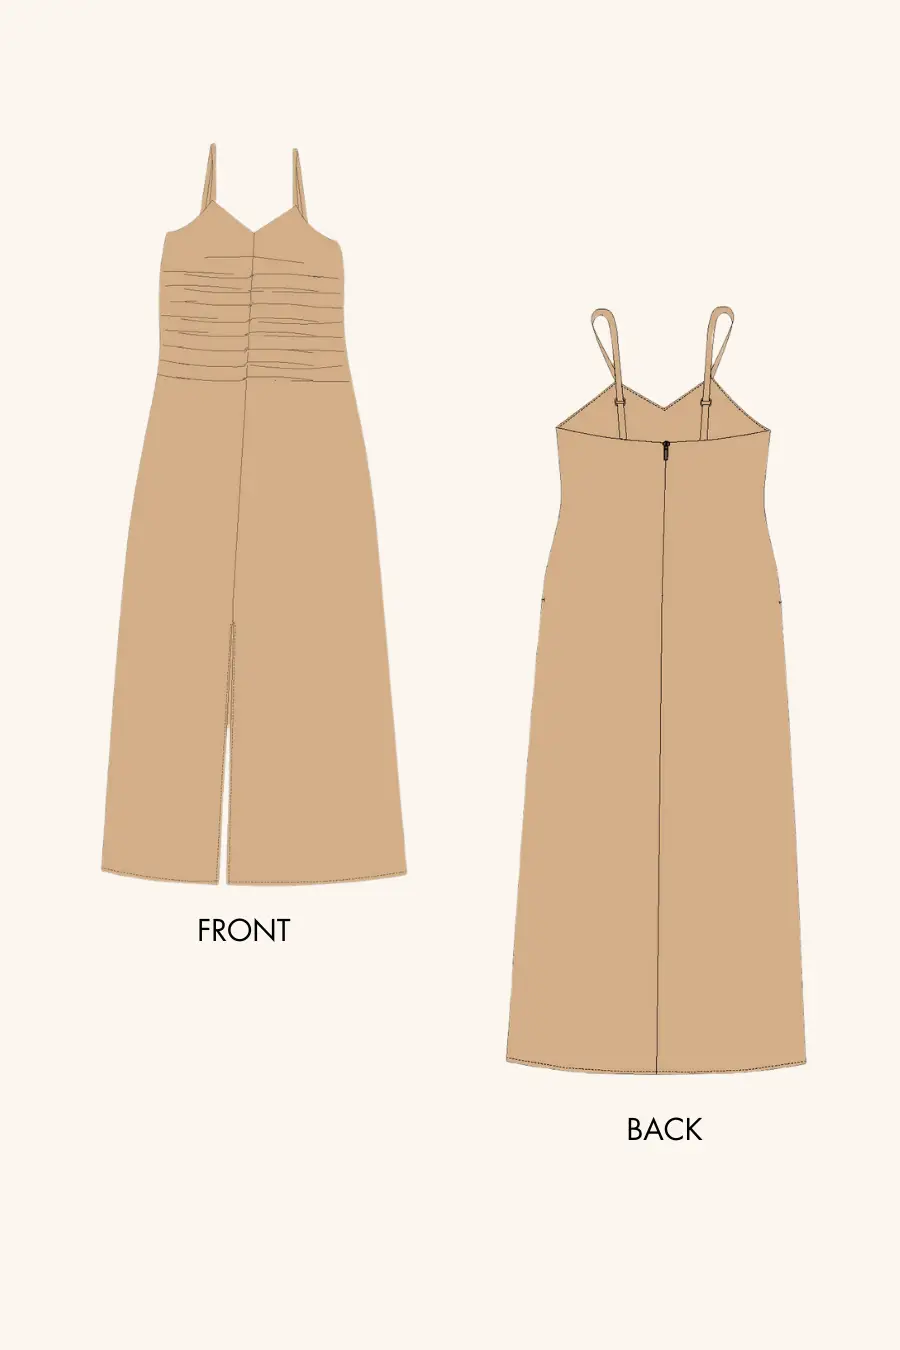 'Robin' Slit Dress Sewing Pattern